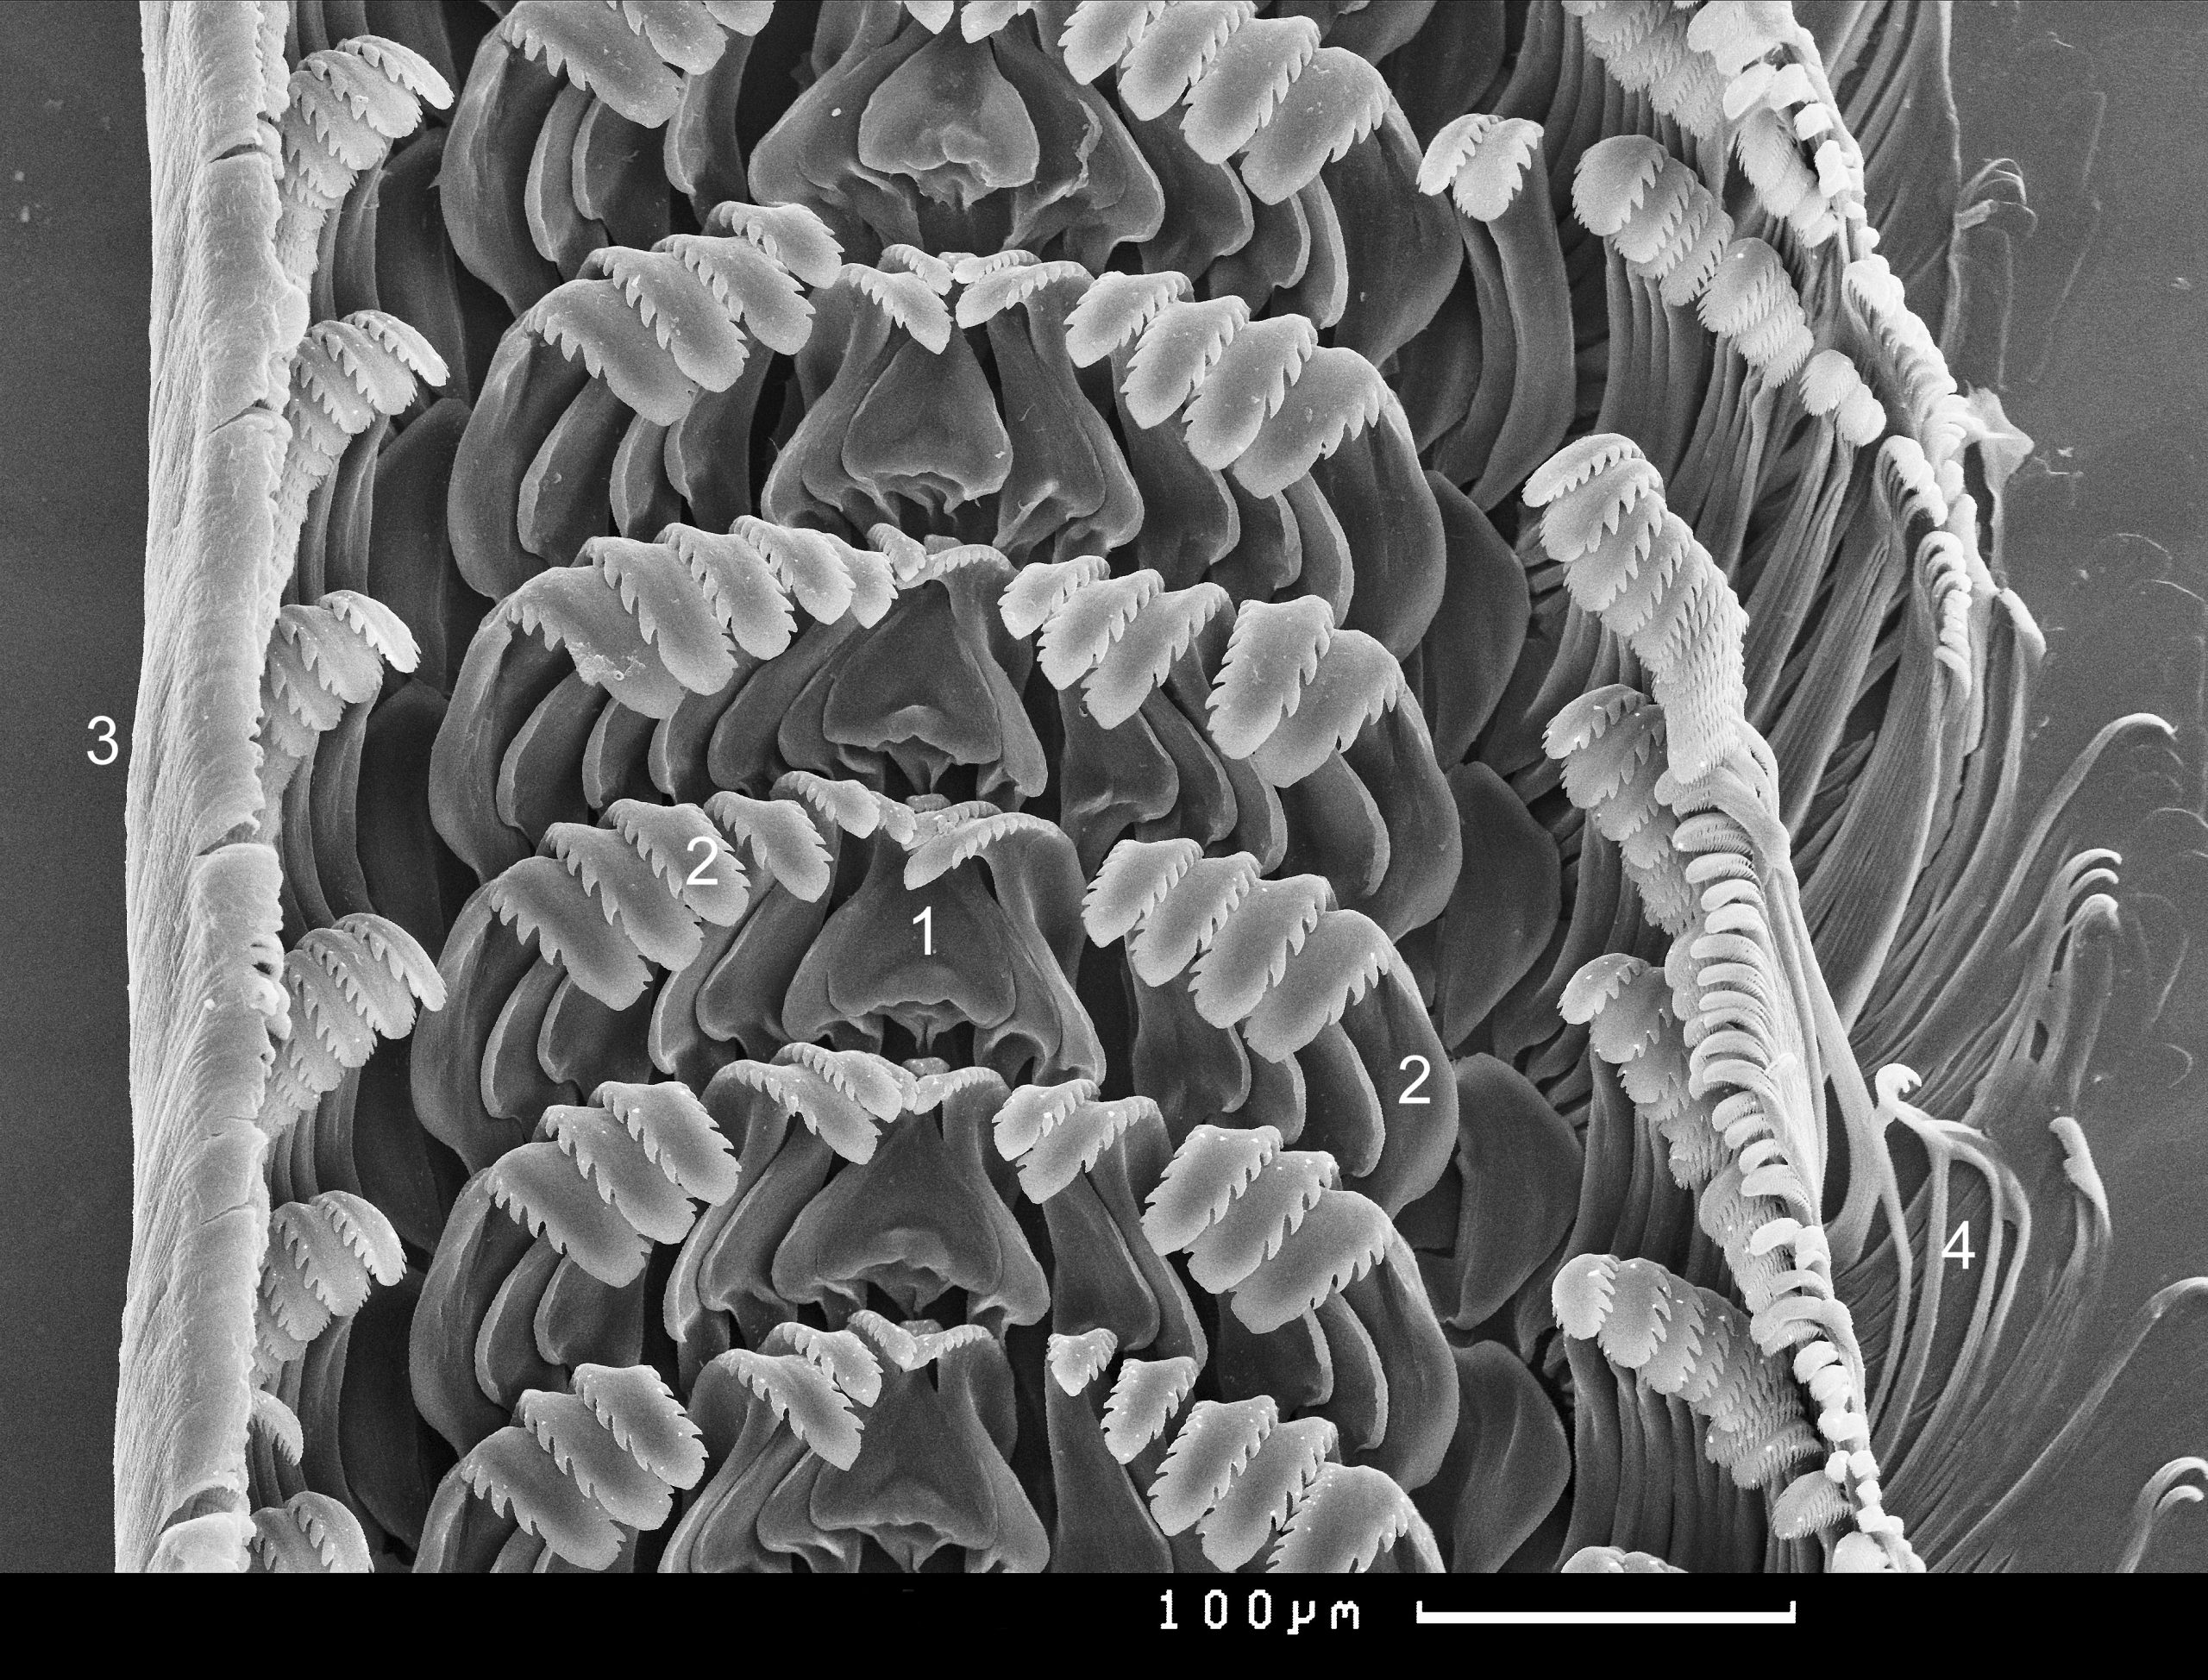 17 Margarites helicinus.  Six rows of radular teeth. Murman coast, northern Russia. Scanning electron microscope image frame 0.55mm wide.  © I. Nekhaev.